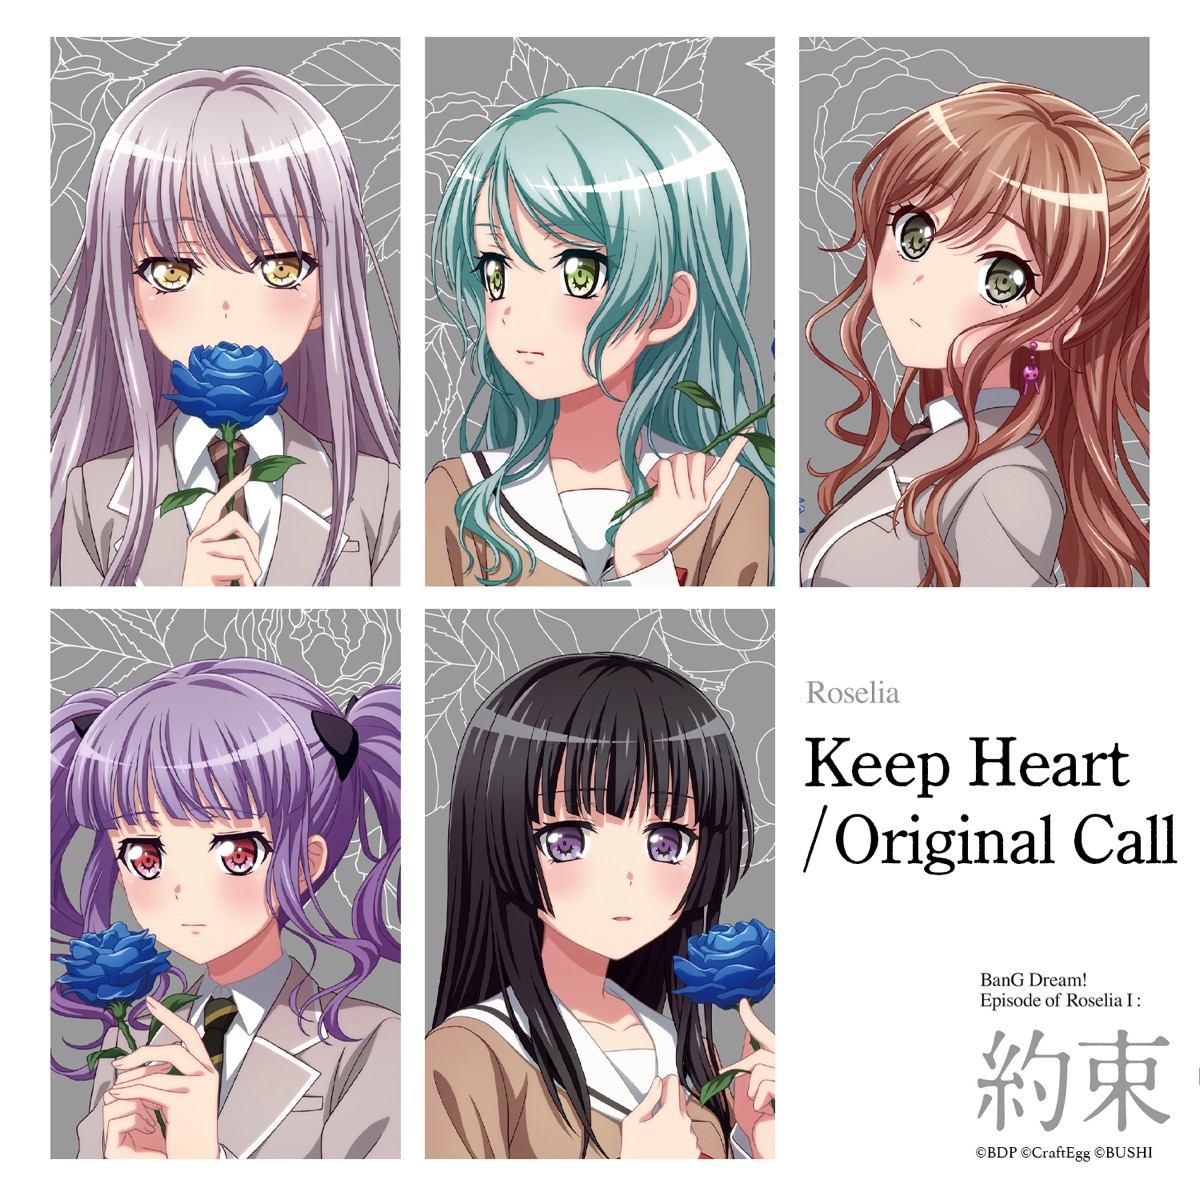 Cover art for『Roselia - Original Call』from the release『Keep Heart / Original Call